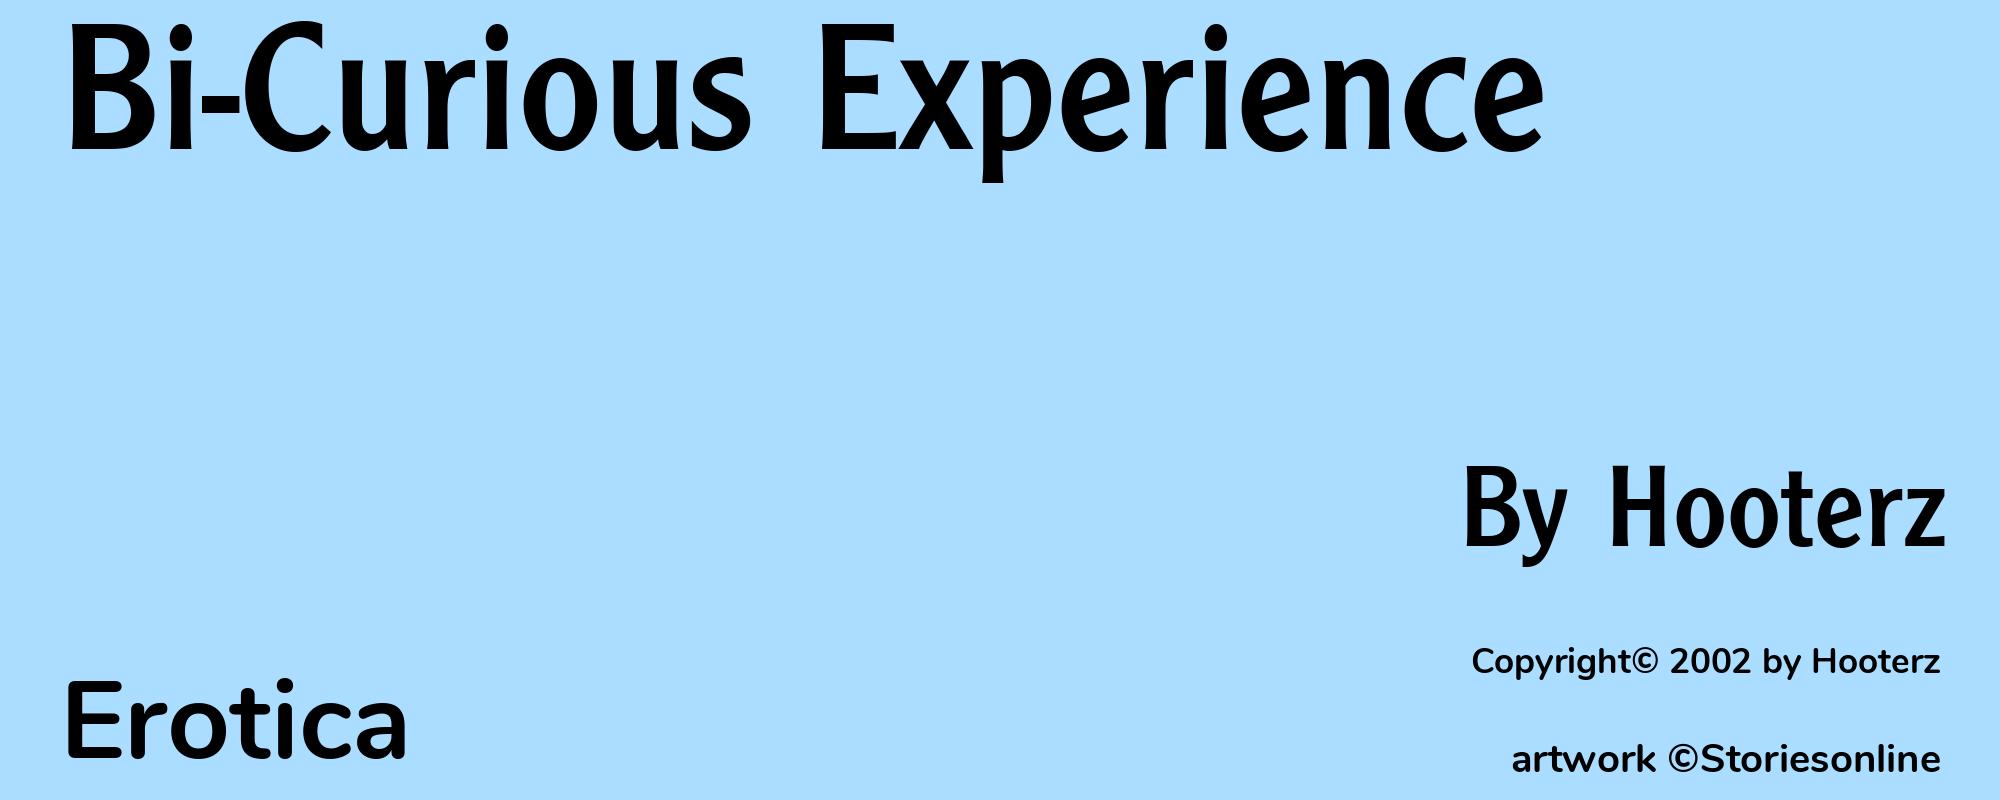 Bi-Curious Experience - Cover